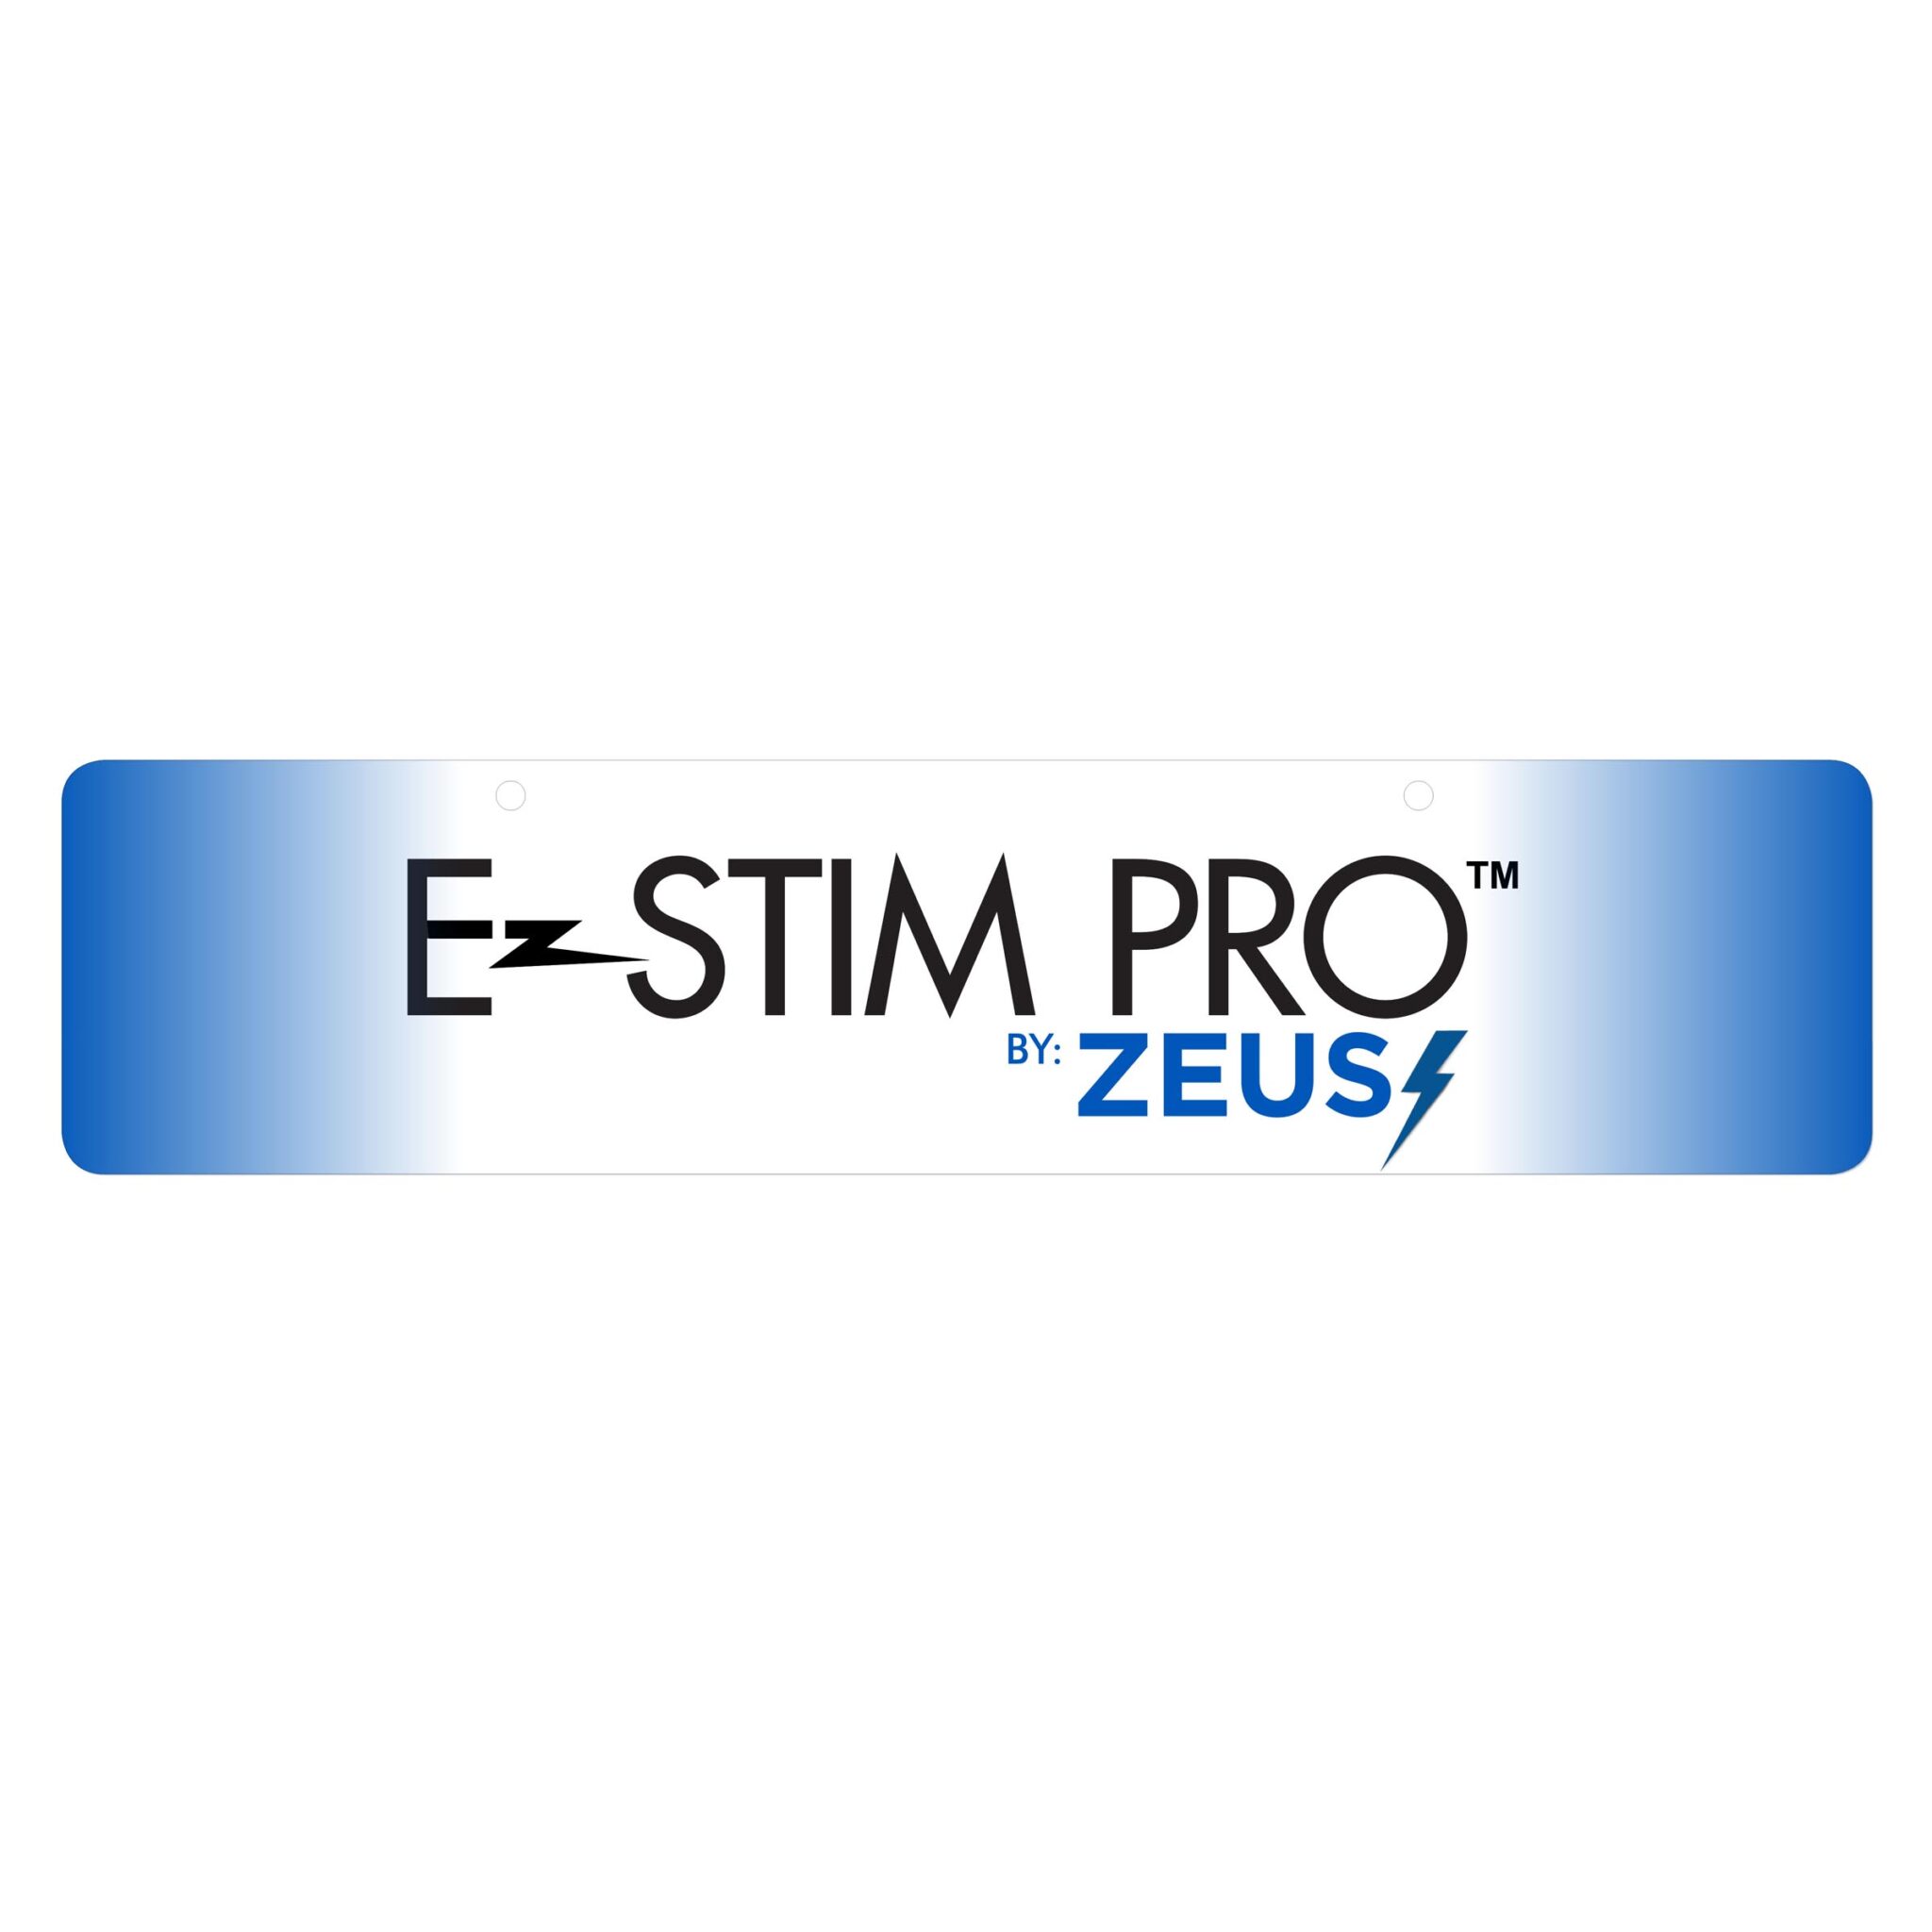 Zeus E-Stim Pro Display Sign